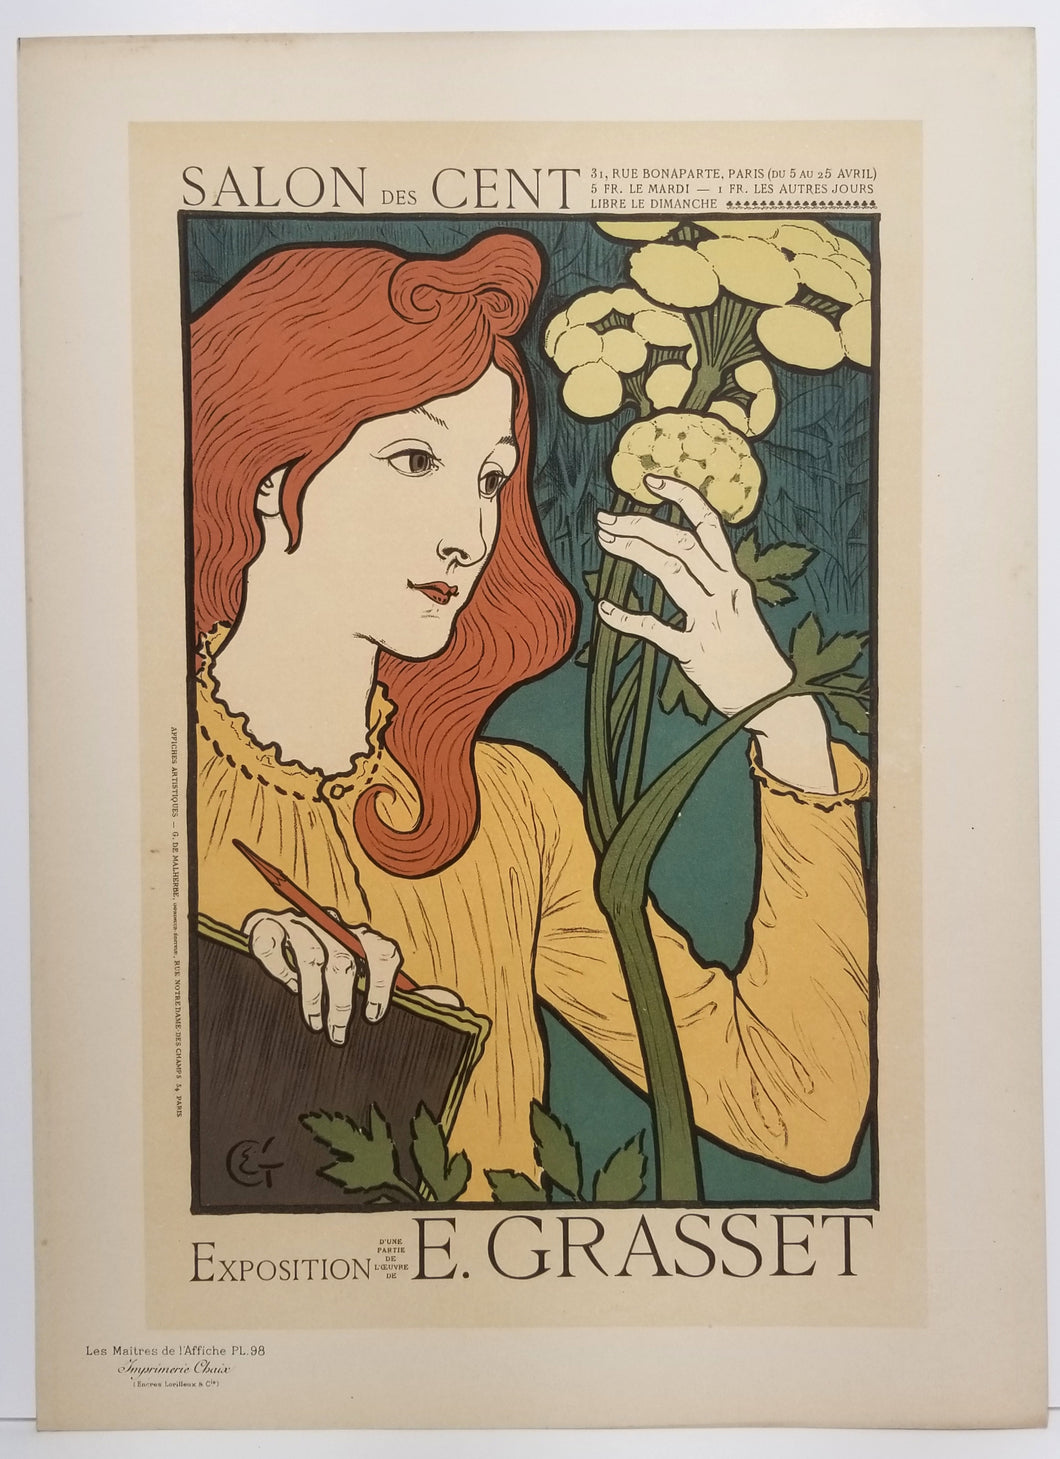 Exposition E. Grasset. 1898.